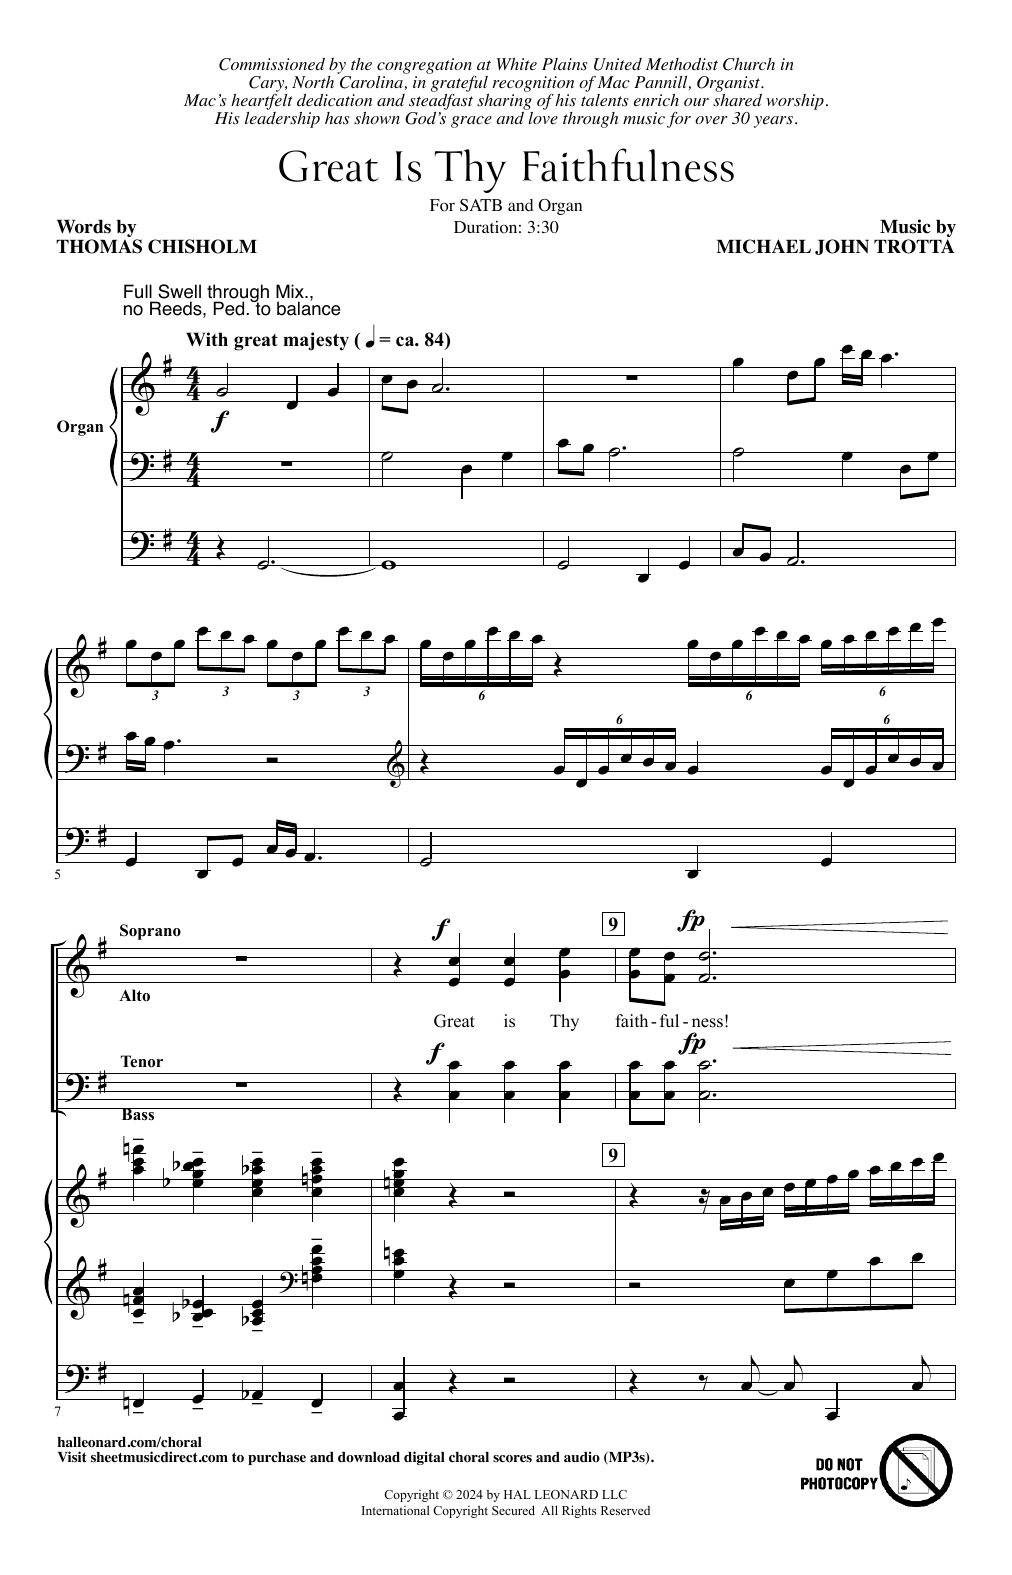 Michael John Trotta Great Is Thy Faithfulness Sheet Music Notes & Chords for SATB Choir - Download or Print PDF